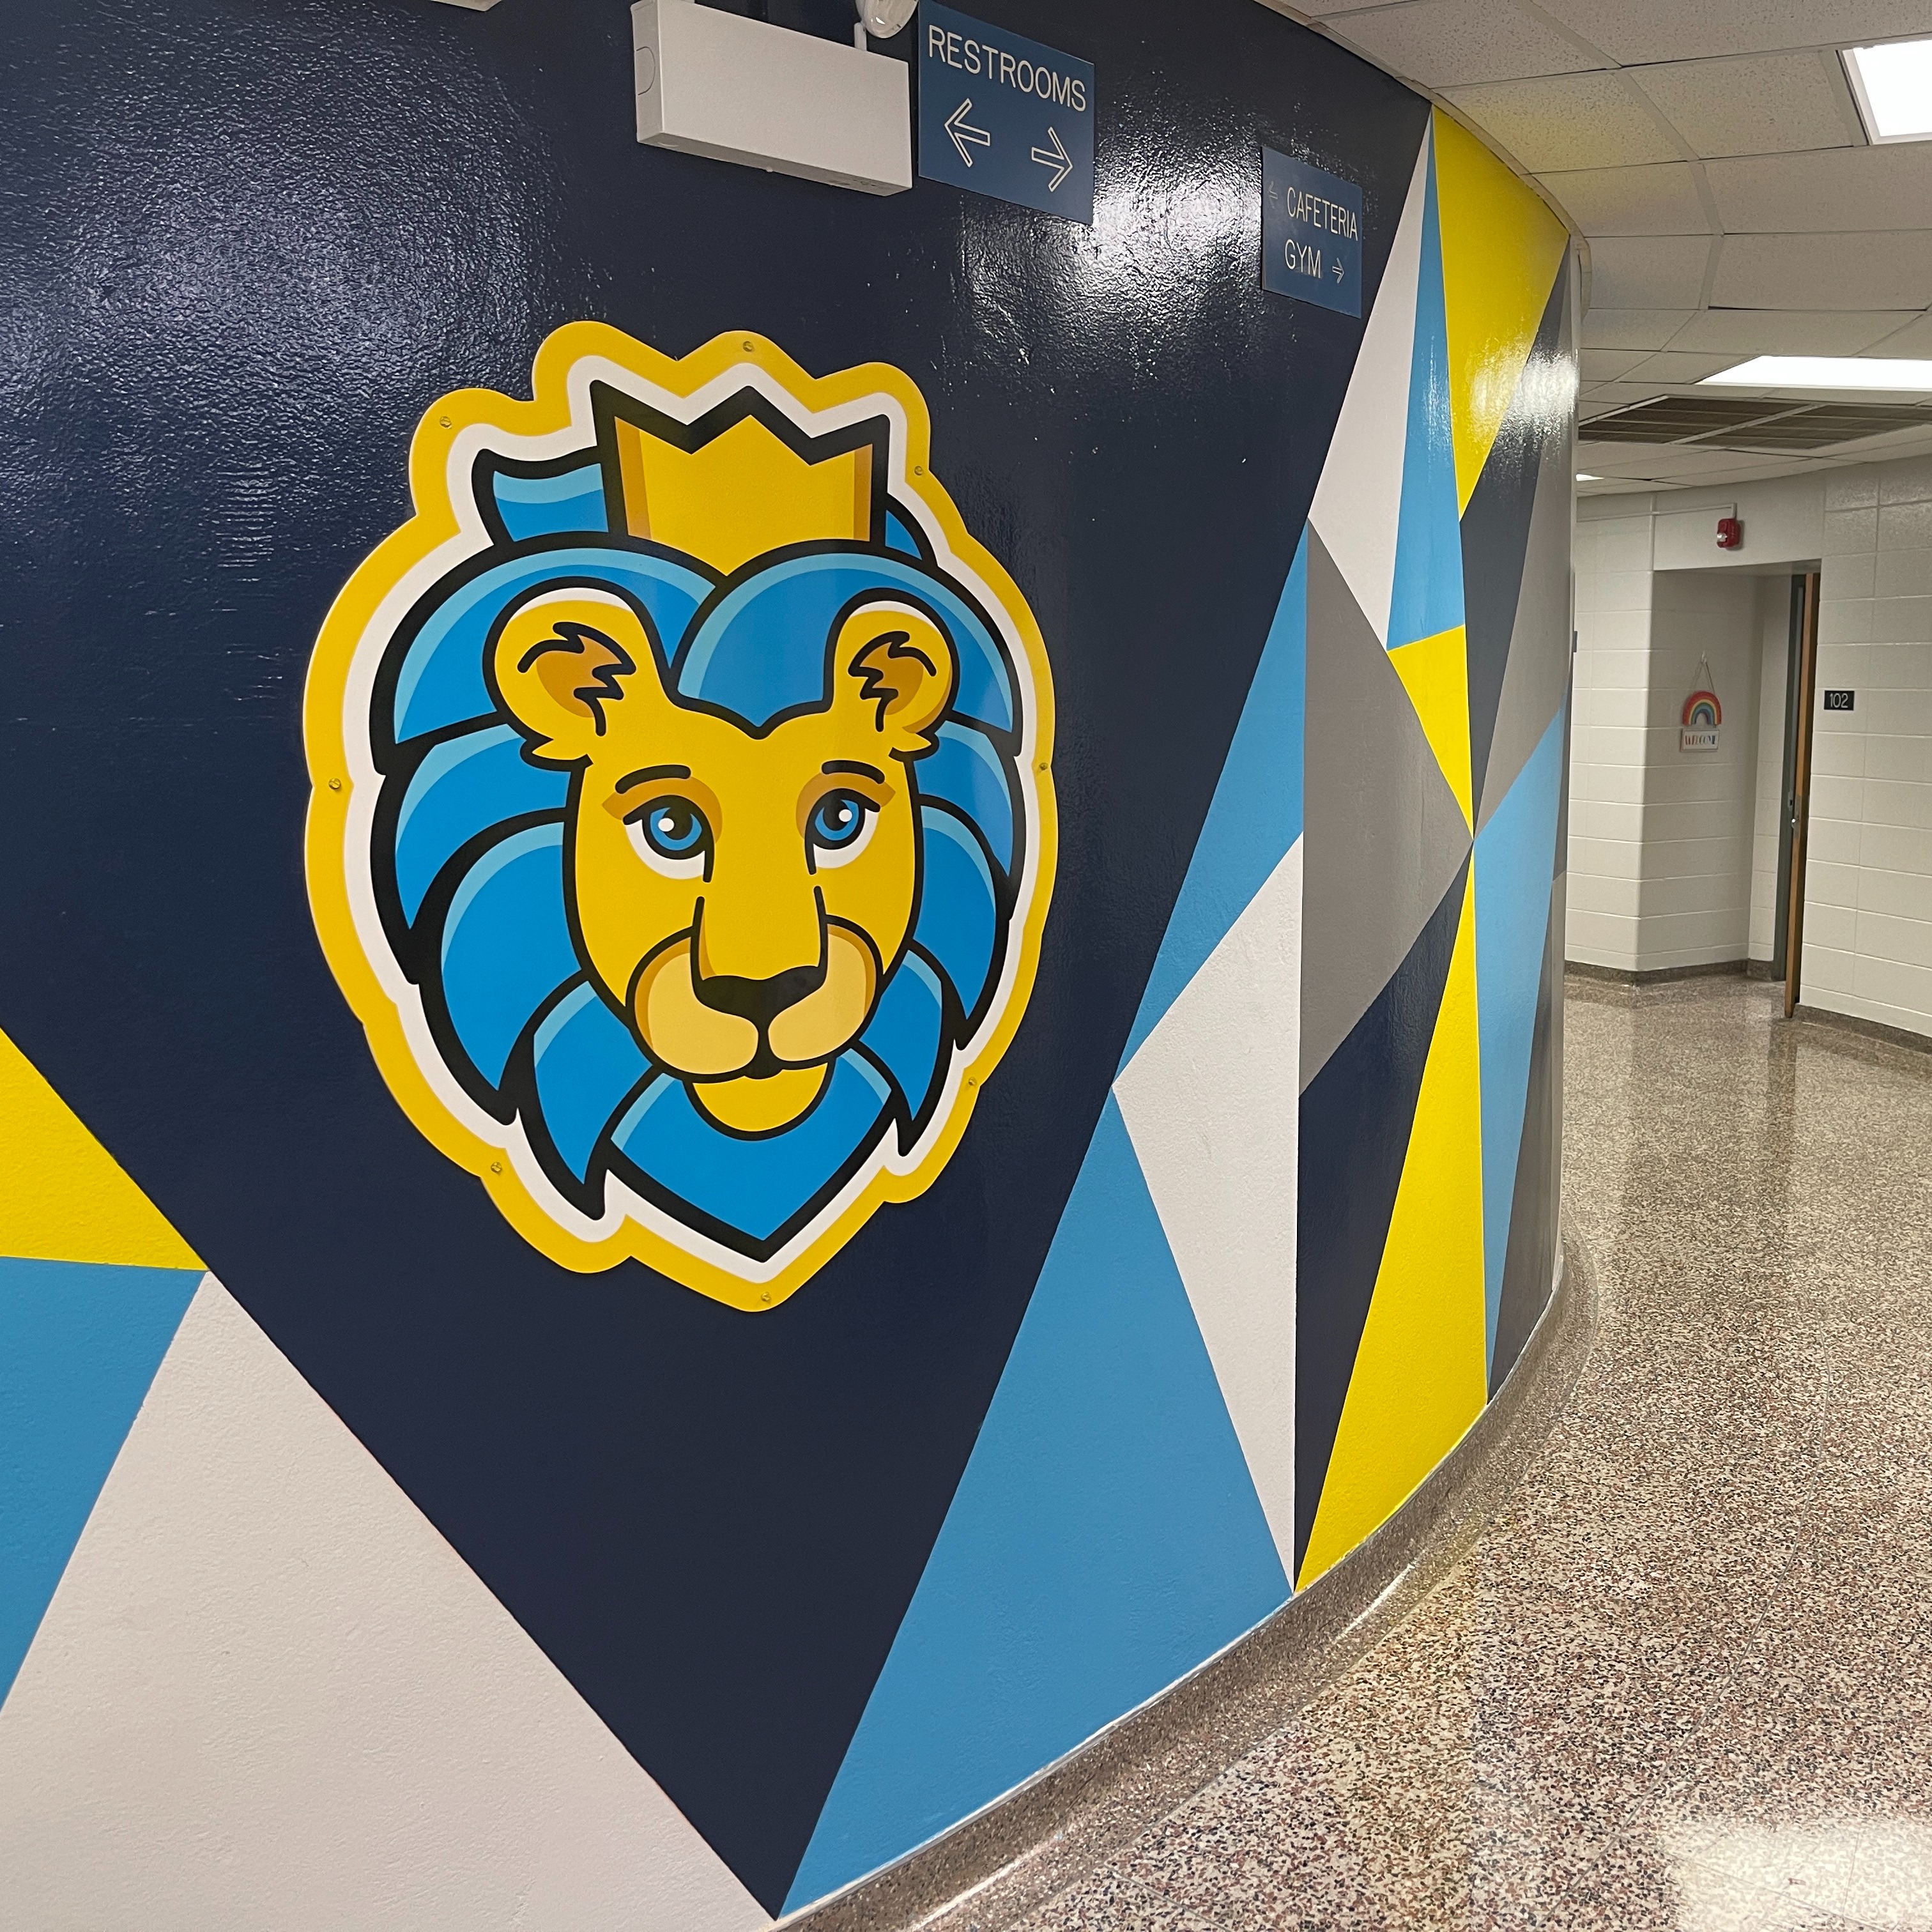 Lion logo on wall in empty school hallway